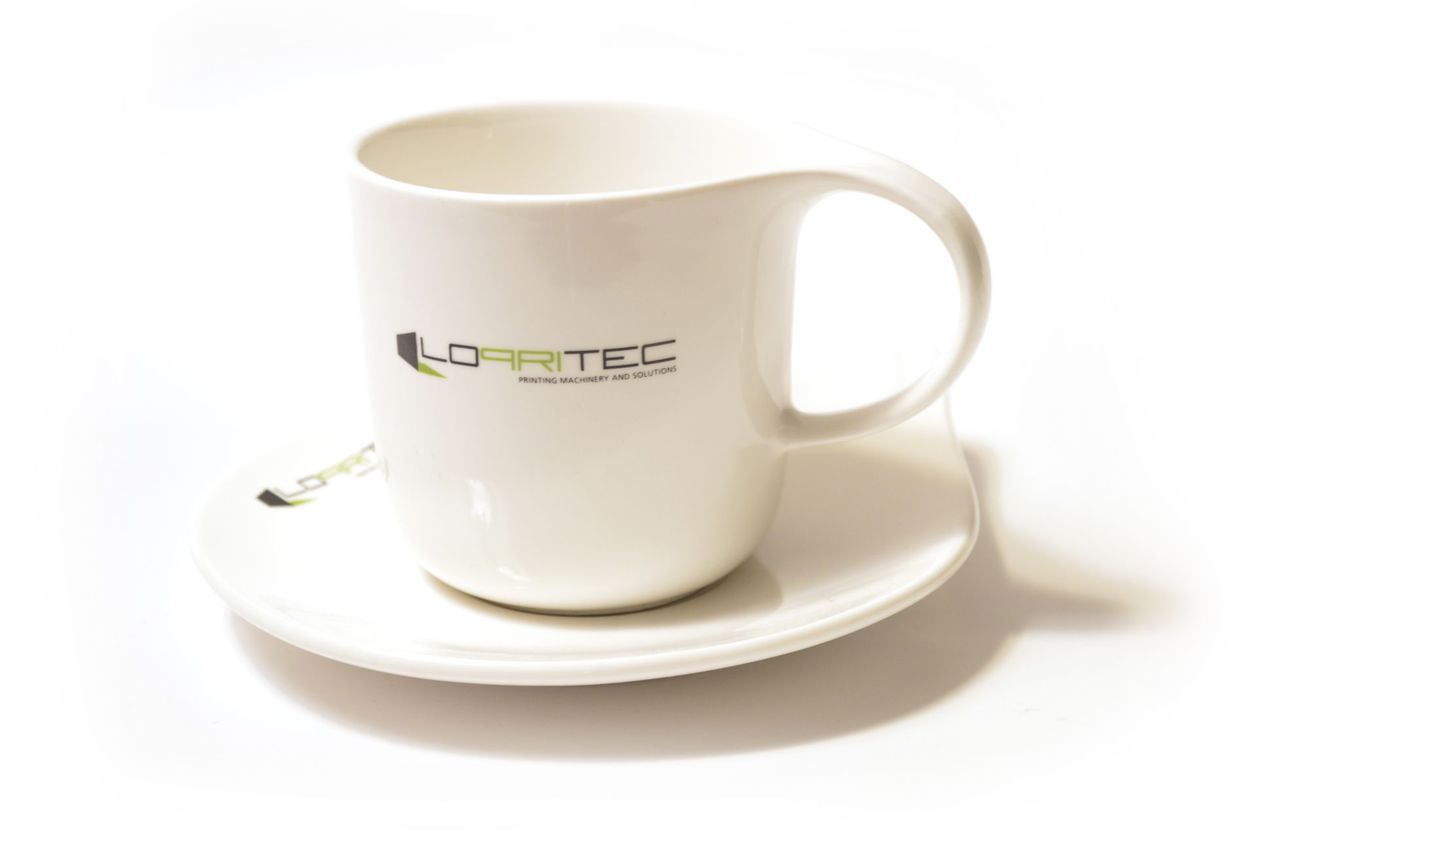 Lopritec coffee ware